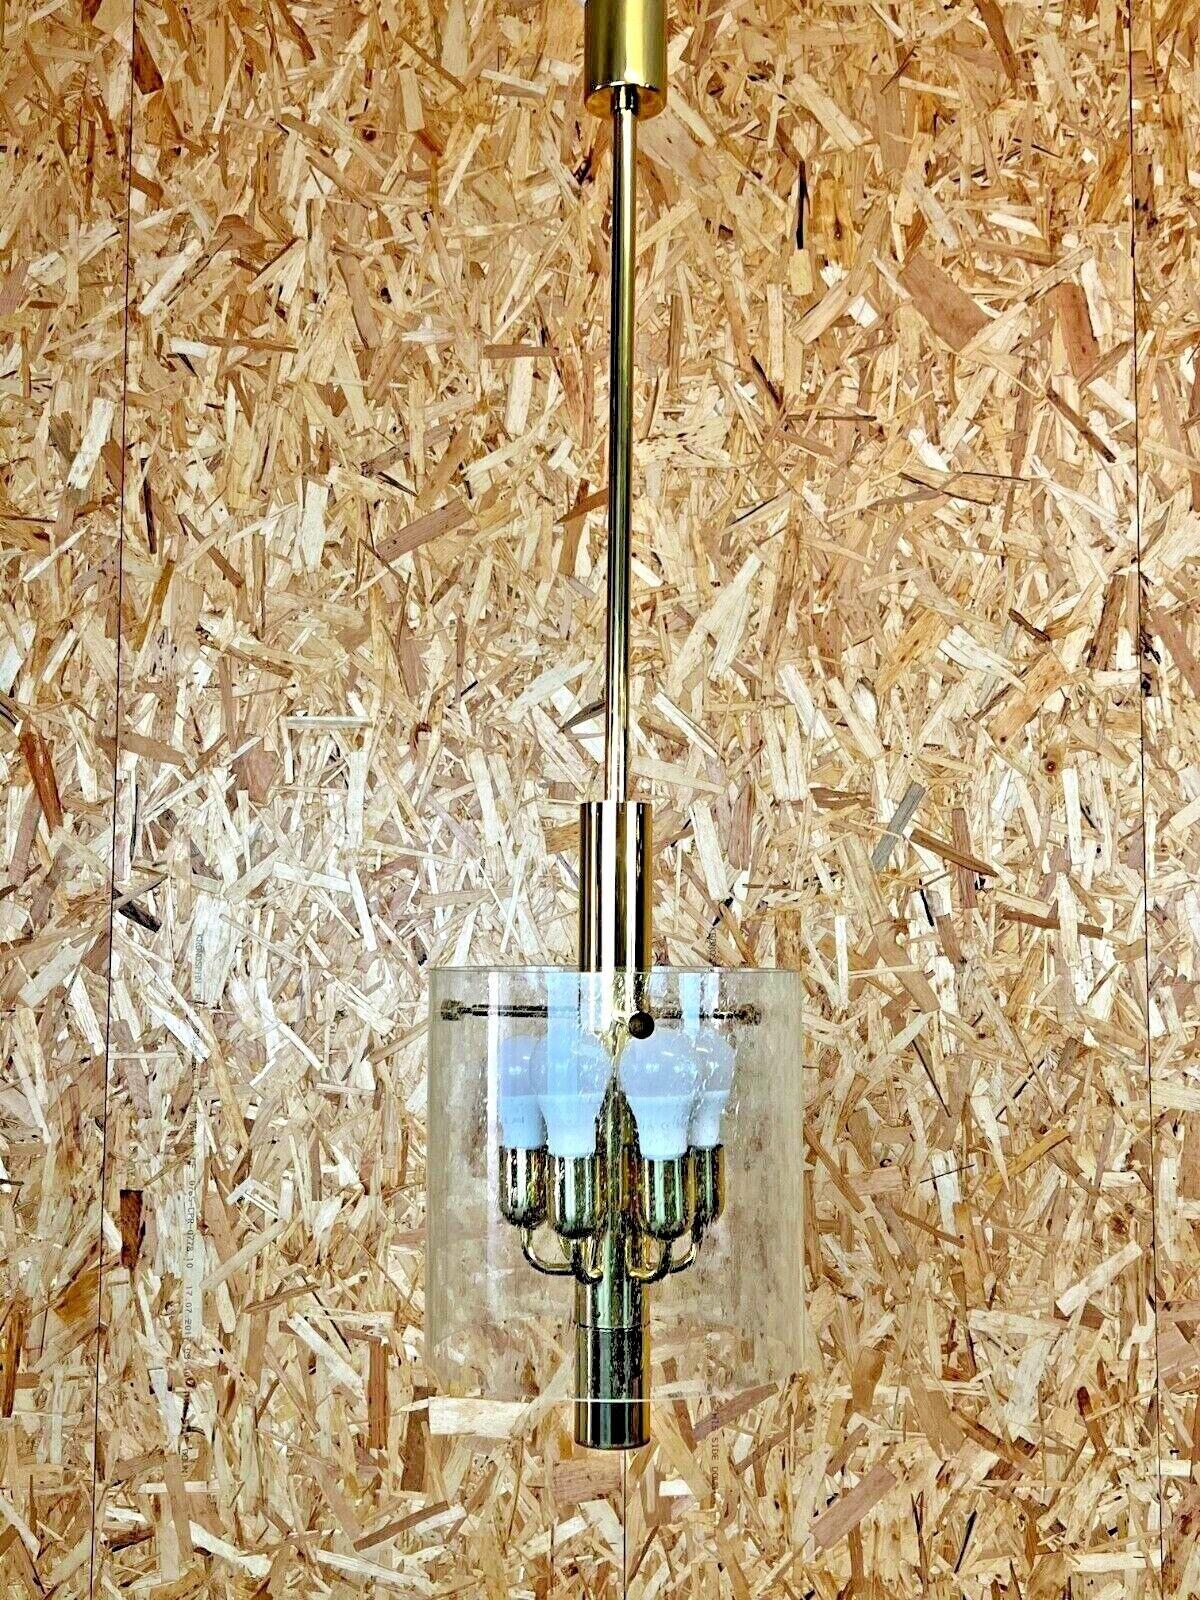 60s 70s Chandelier huge chandelier pendant lamp limburg glass & chrome design

Object: chandelier

Manufacturer: Limburg

Condition: good - vintage

Age: around 1960-1970

Dimensions:

Diameter = 30cm
Height = 115cm

Other